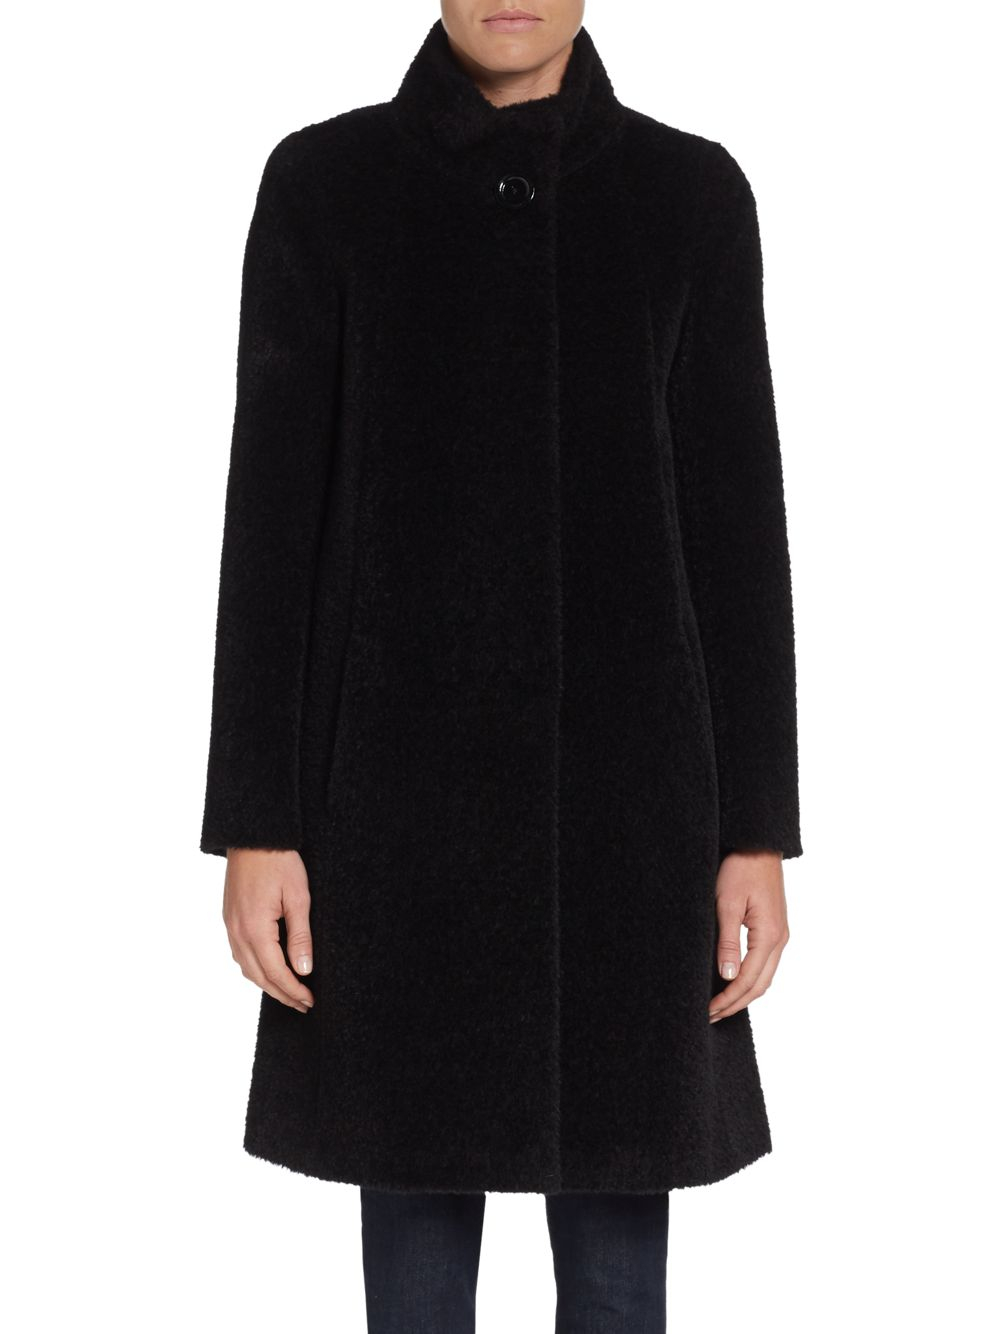 Cinzia Rocca A-Line Wool & Alpaca Coat in Black - Lyst